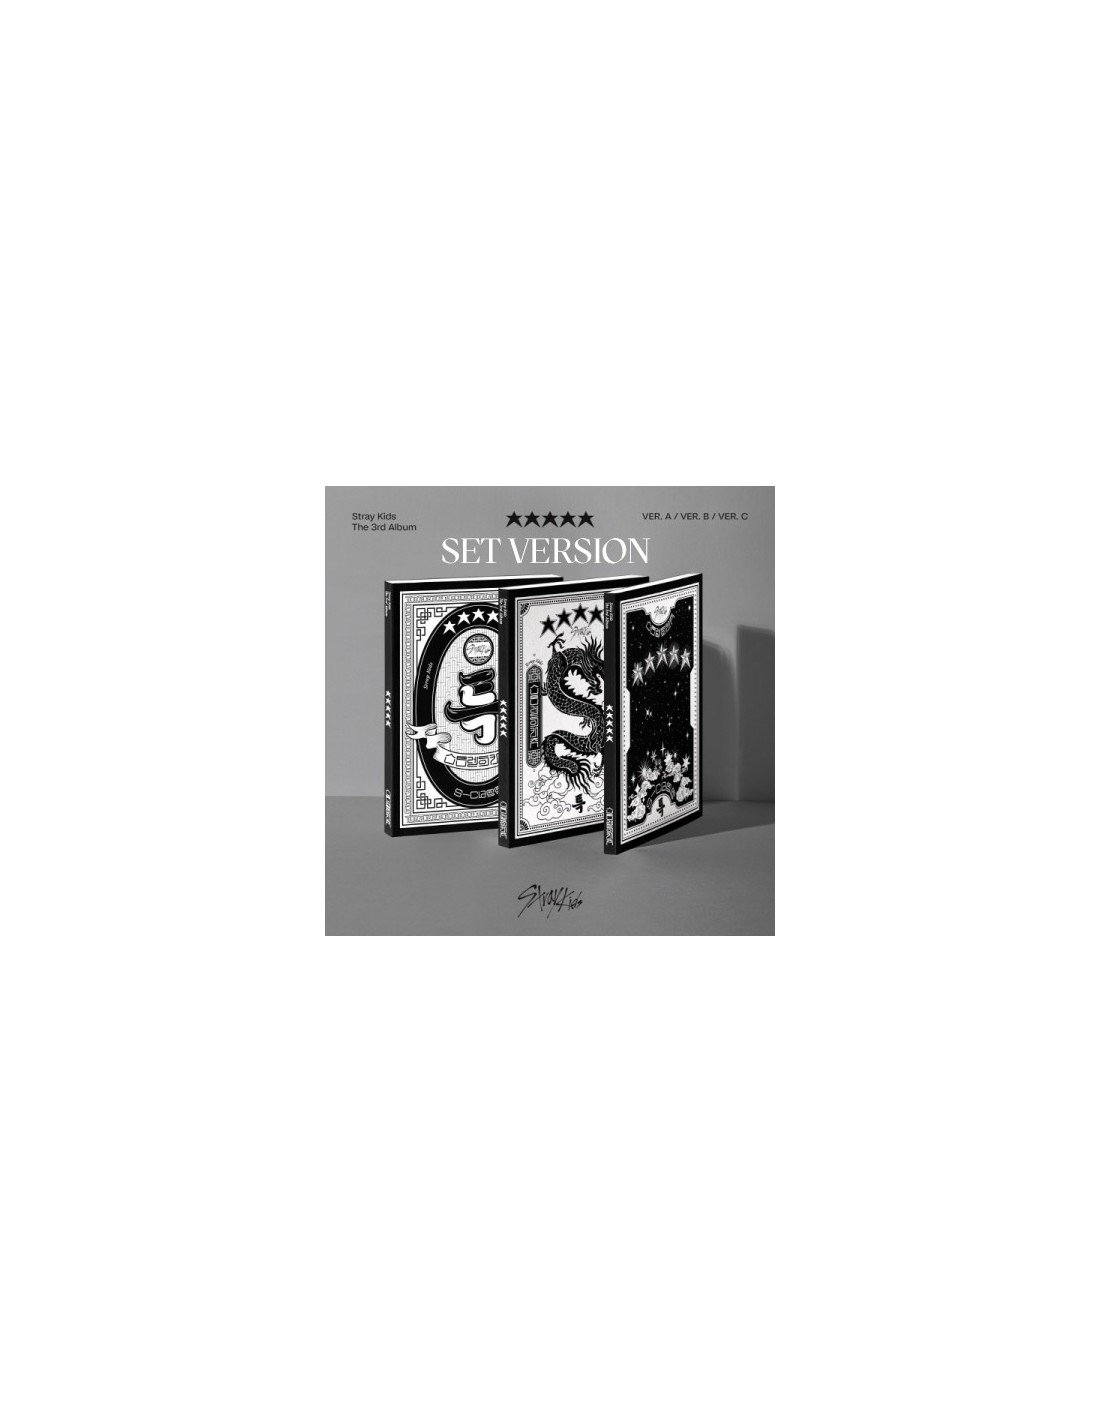 Stray Kids - [ (5-STAR)] (3rd Album C Version) –